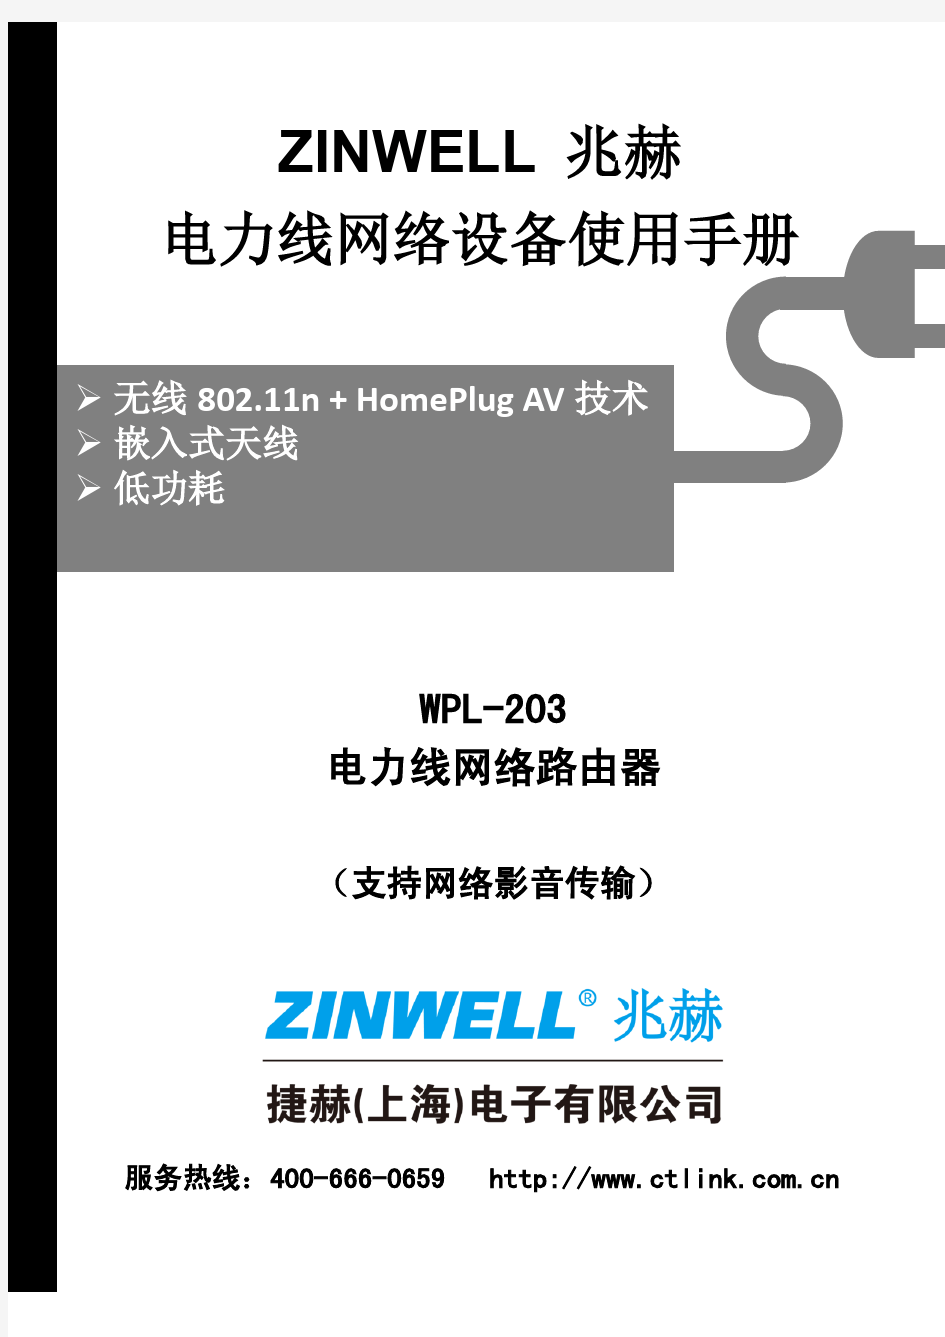 WPL-203中文版本说明书